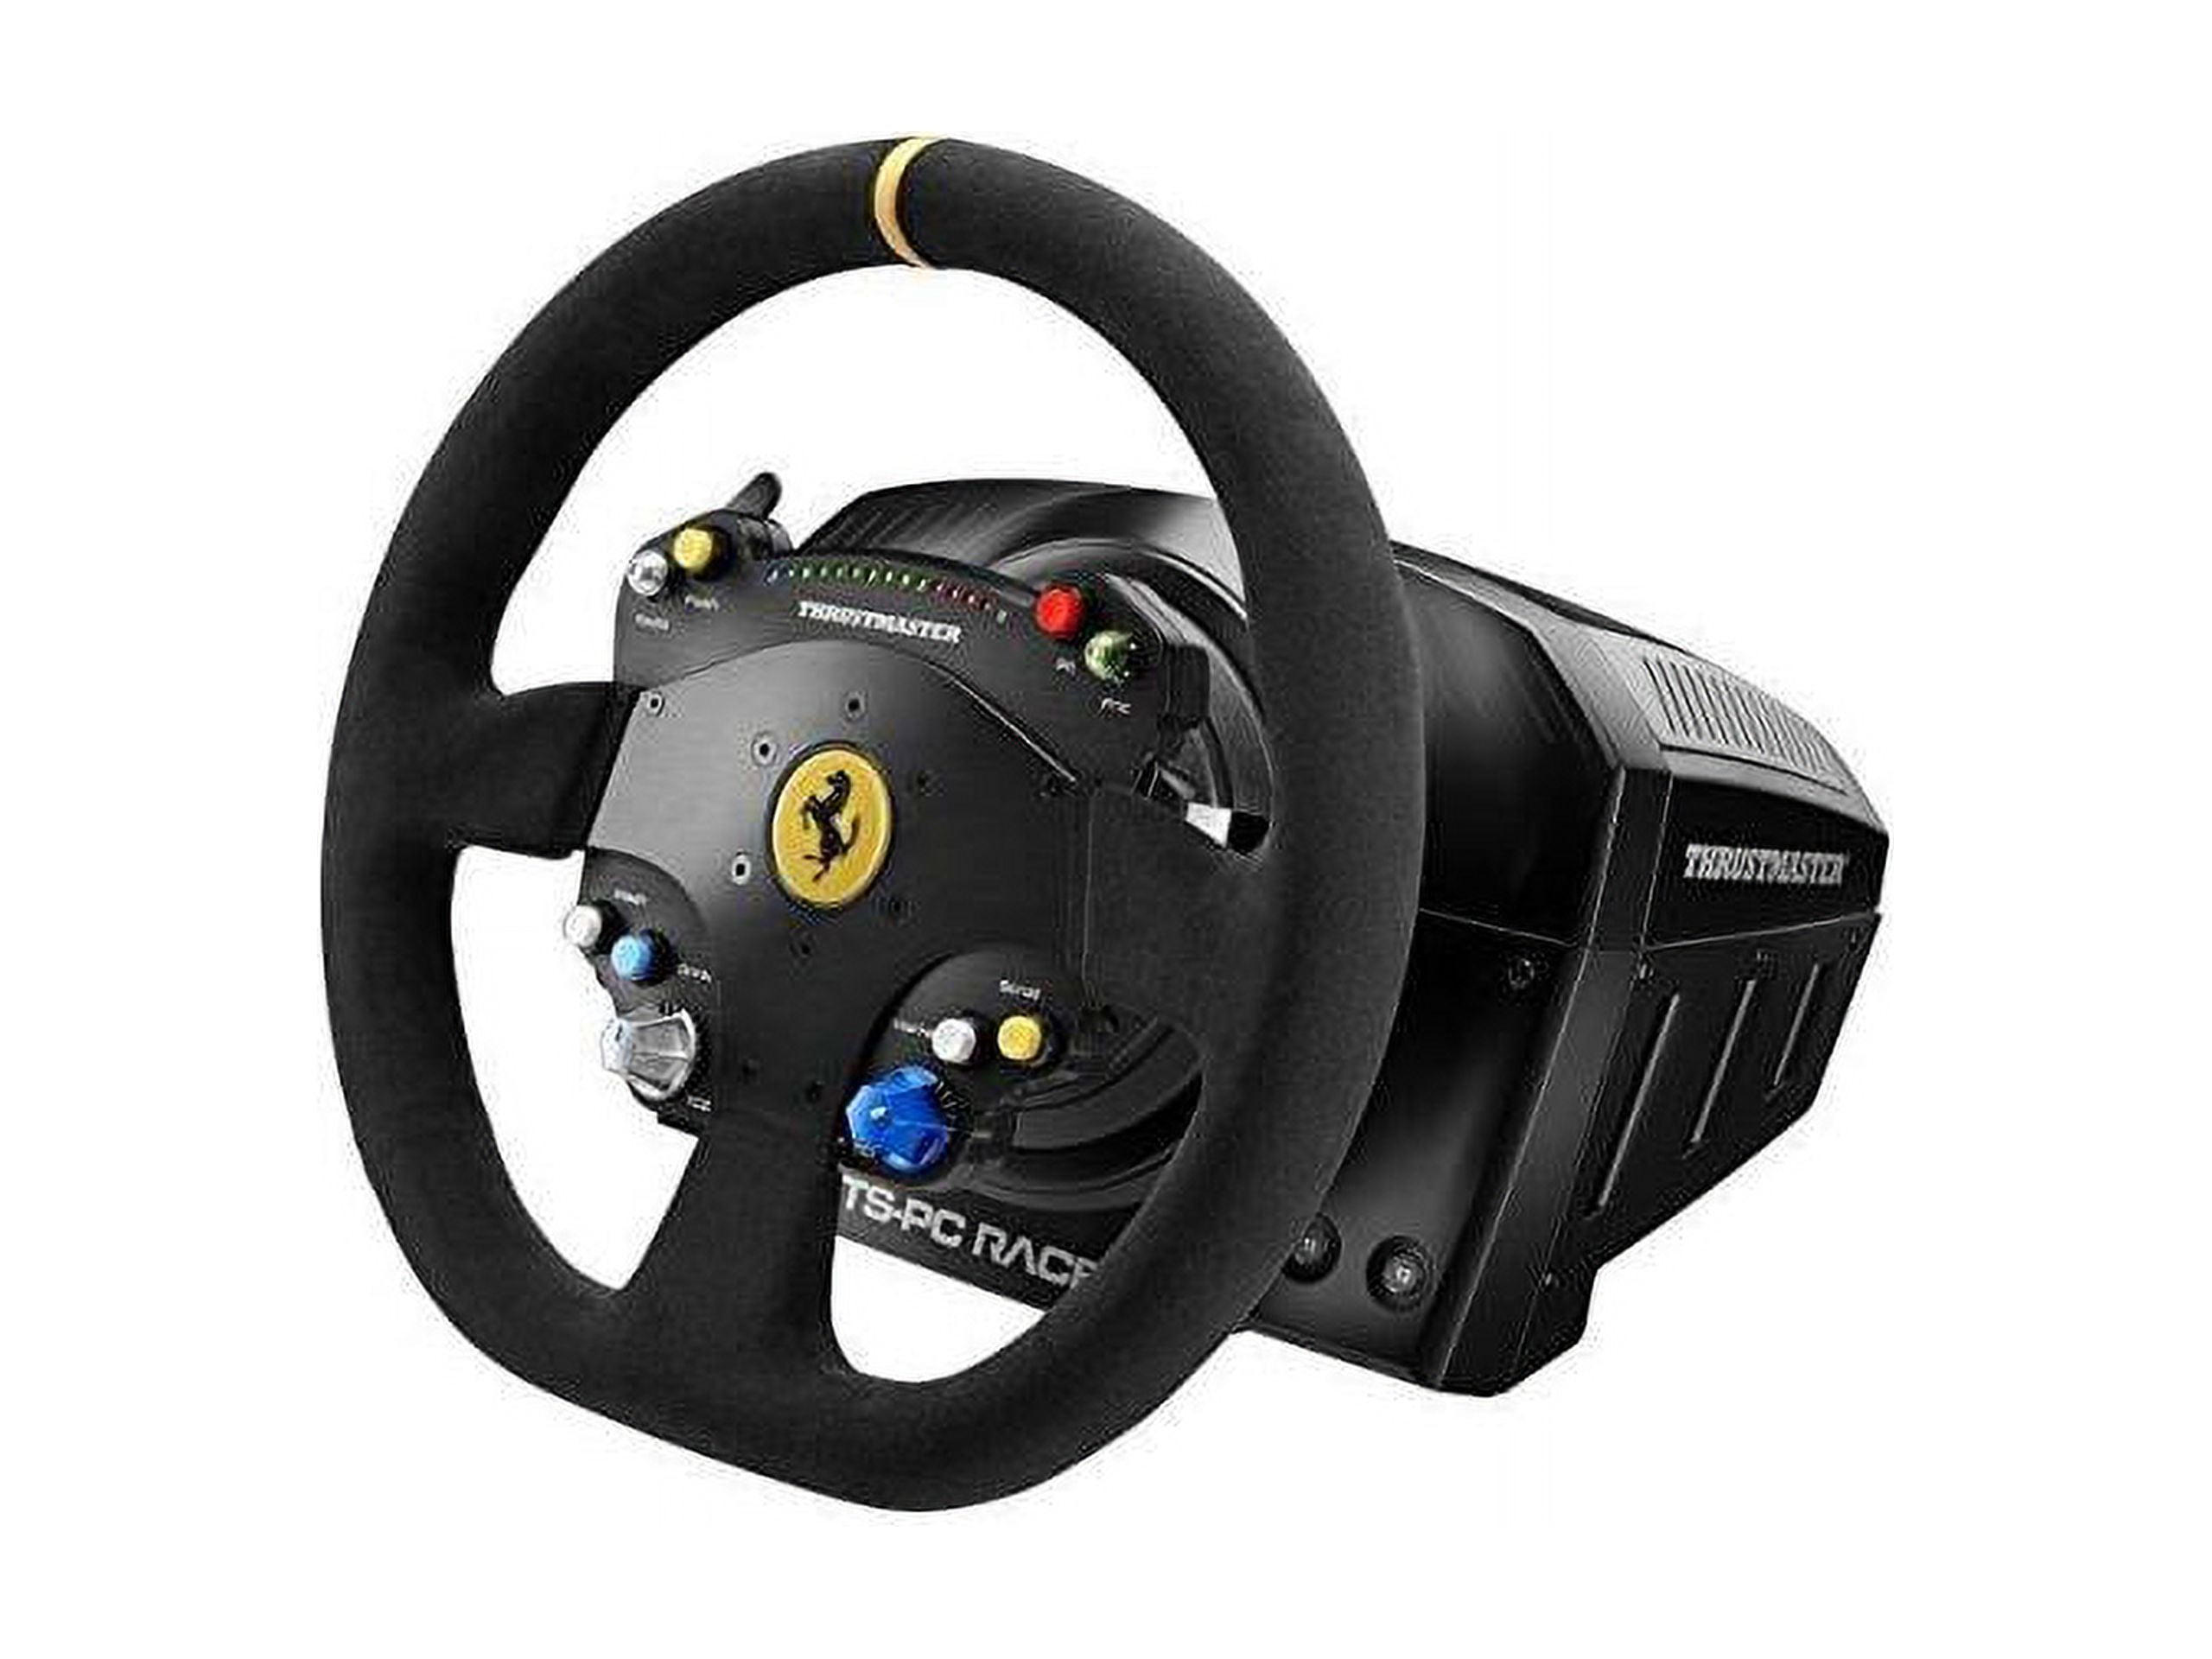 Wheel stand pro+T300RS édition Ferrari - Le coin gamer de Chosespawn